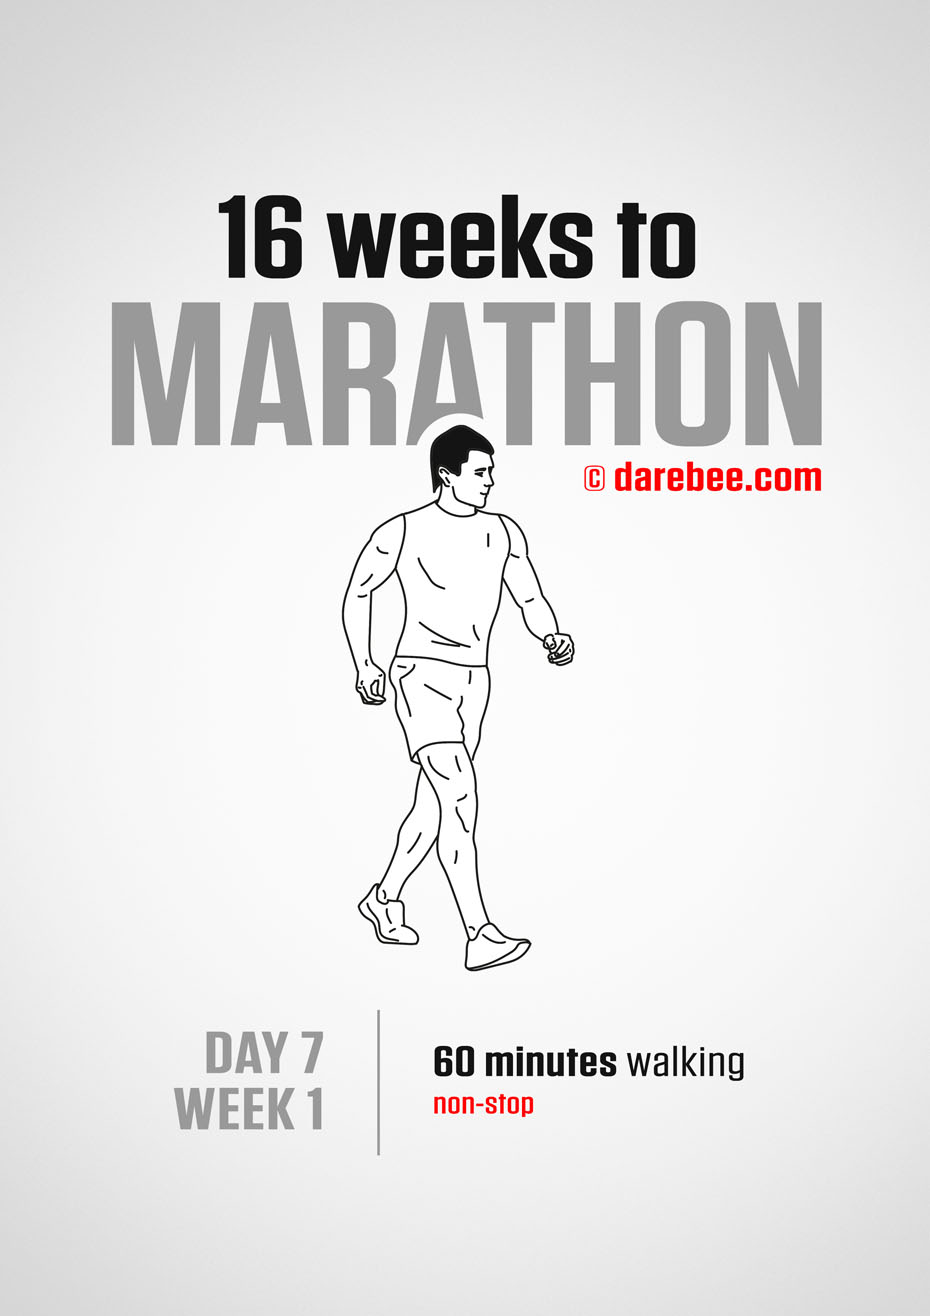 Marathon Training Program by DAREBEE